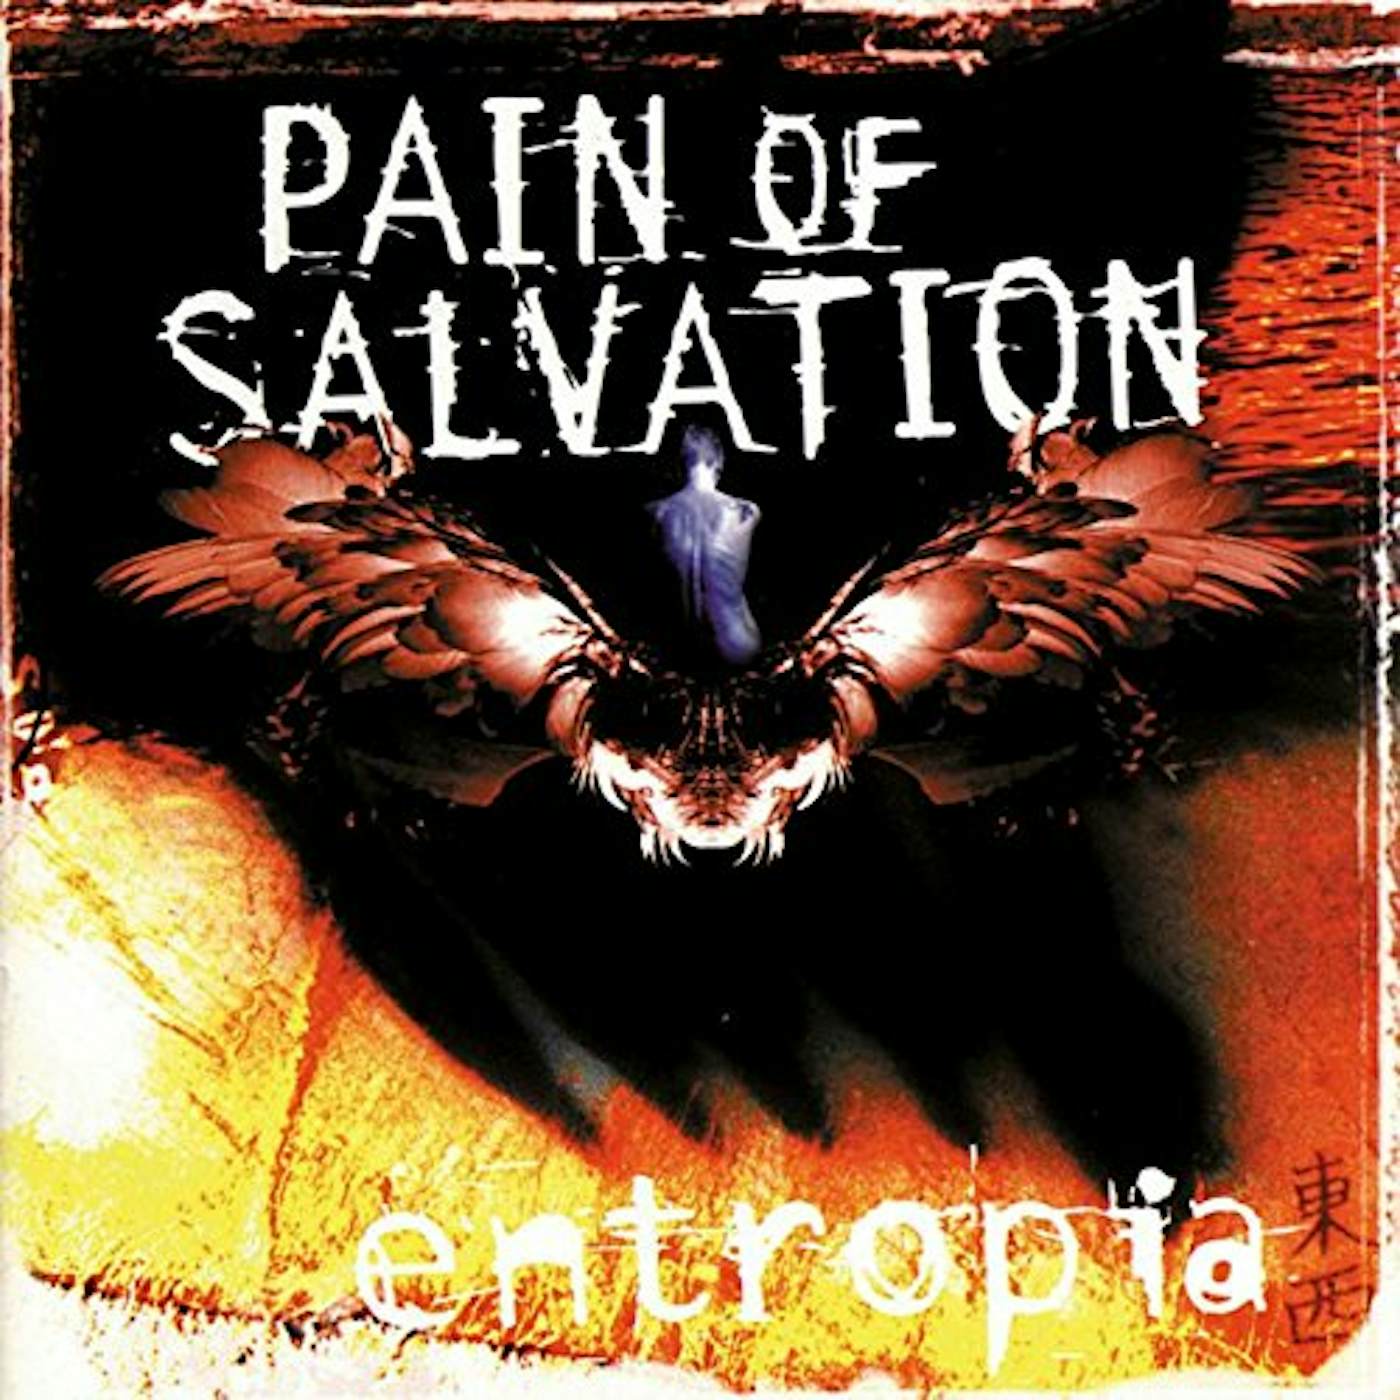 Pain of Salvation Entropia Vinyl Record